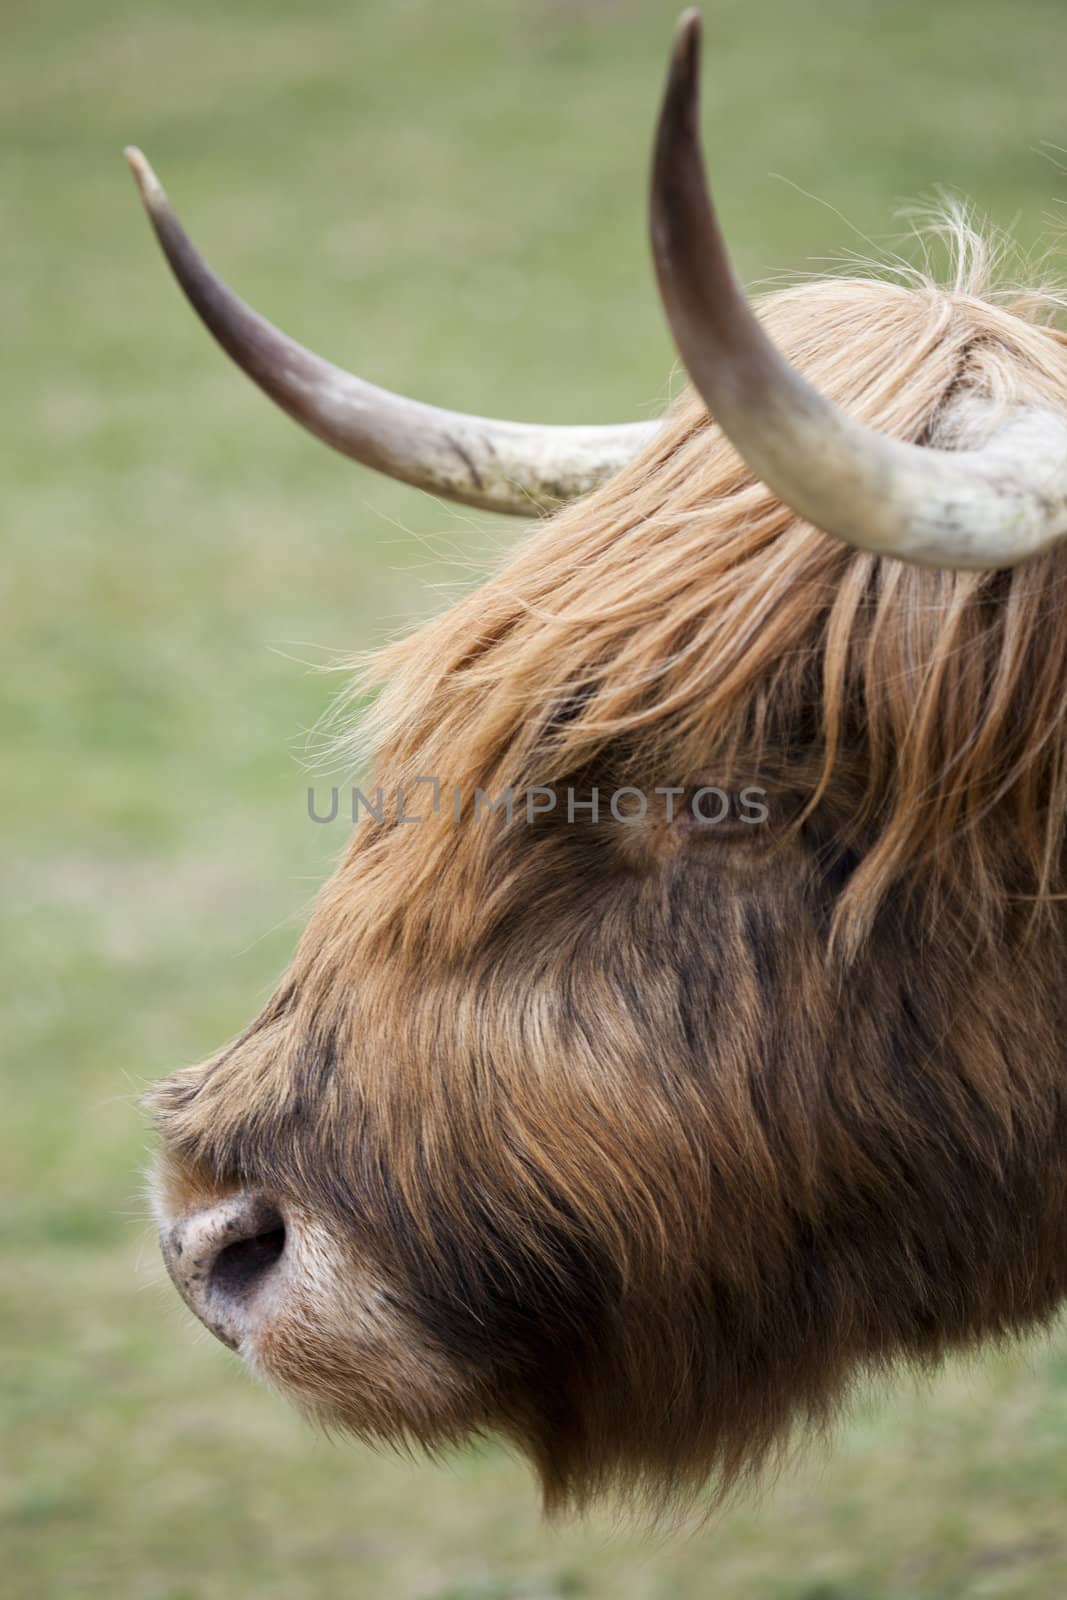 Scottish Highland close up by tjwvandongen